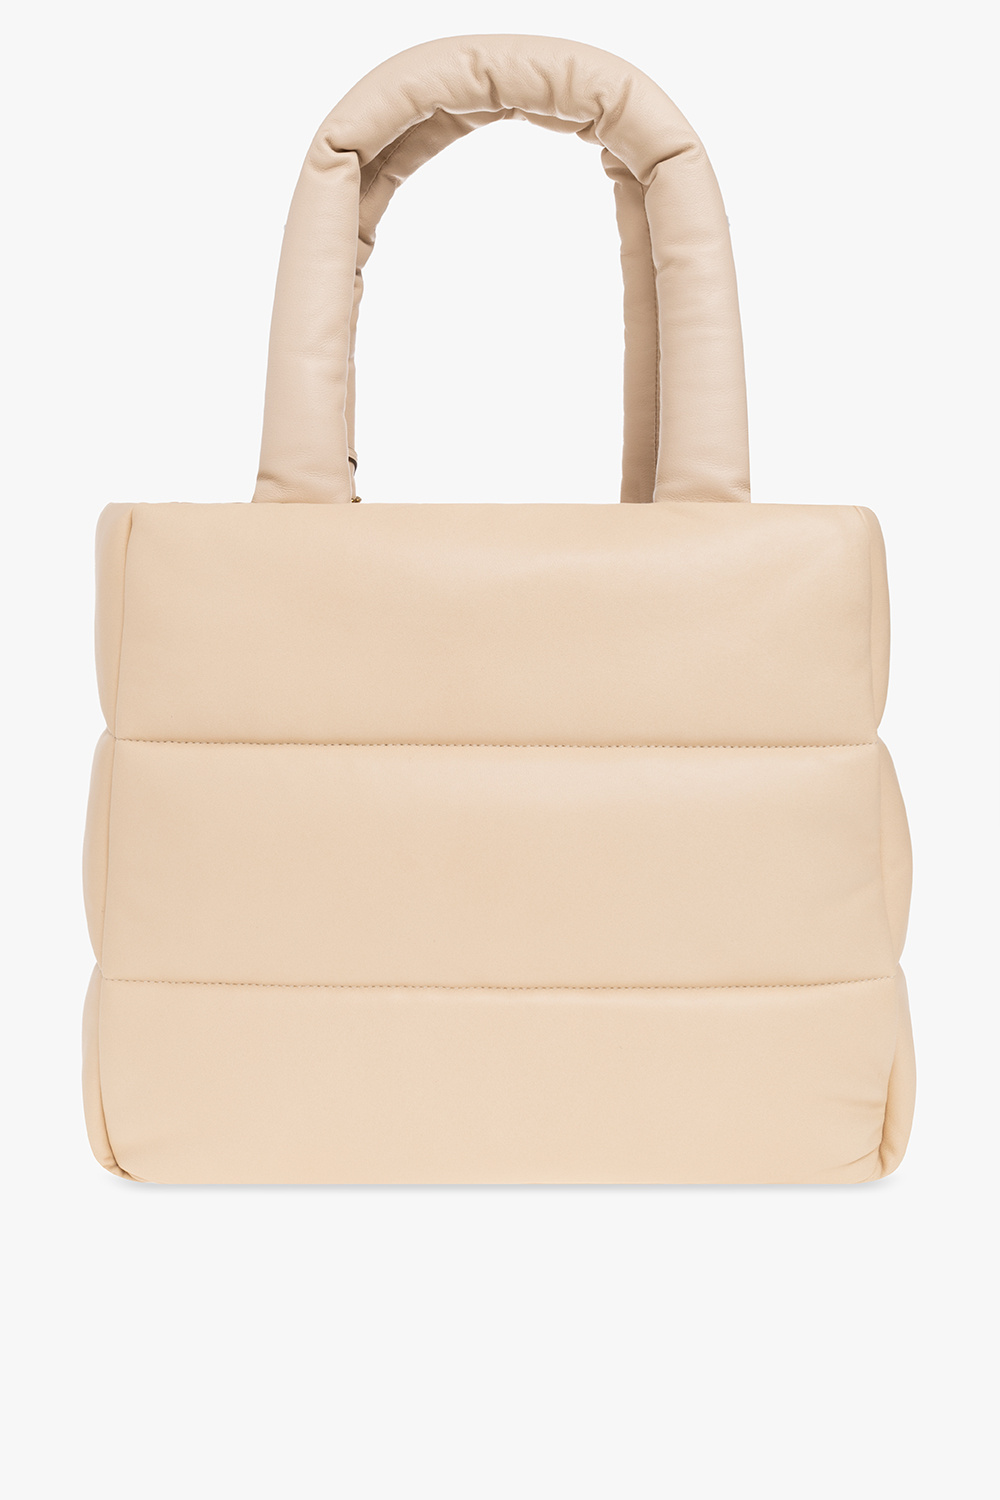 Coach ‘Pillow’ quilted shopper bag